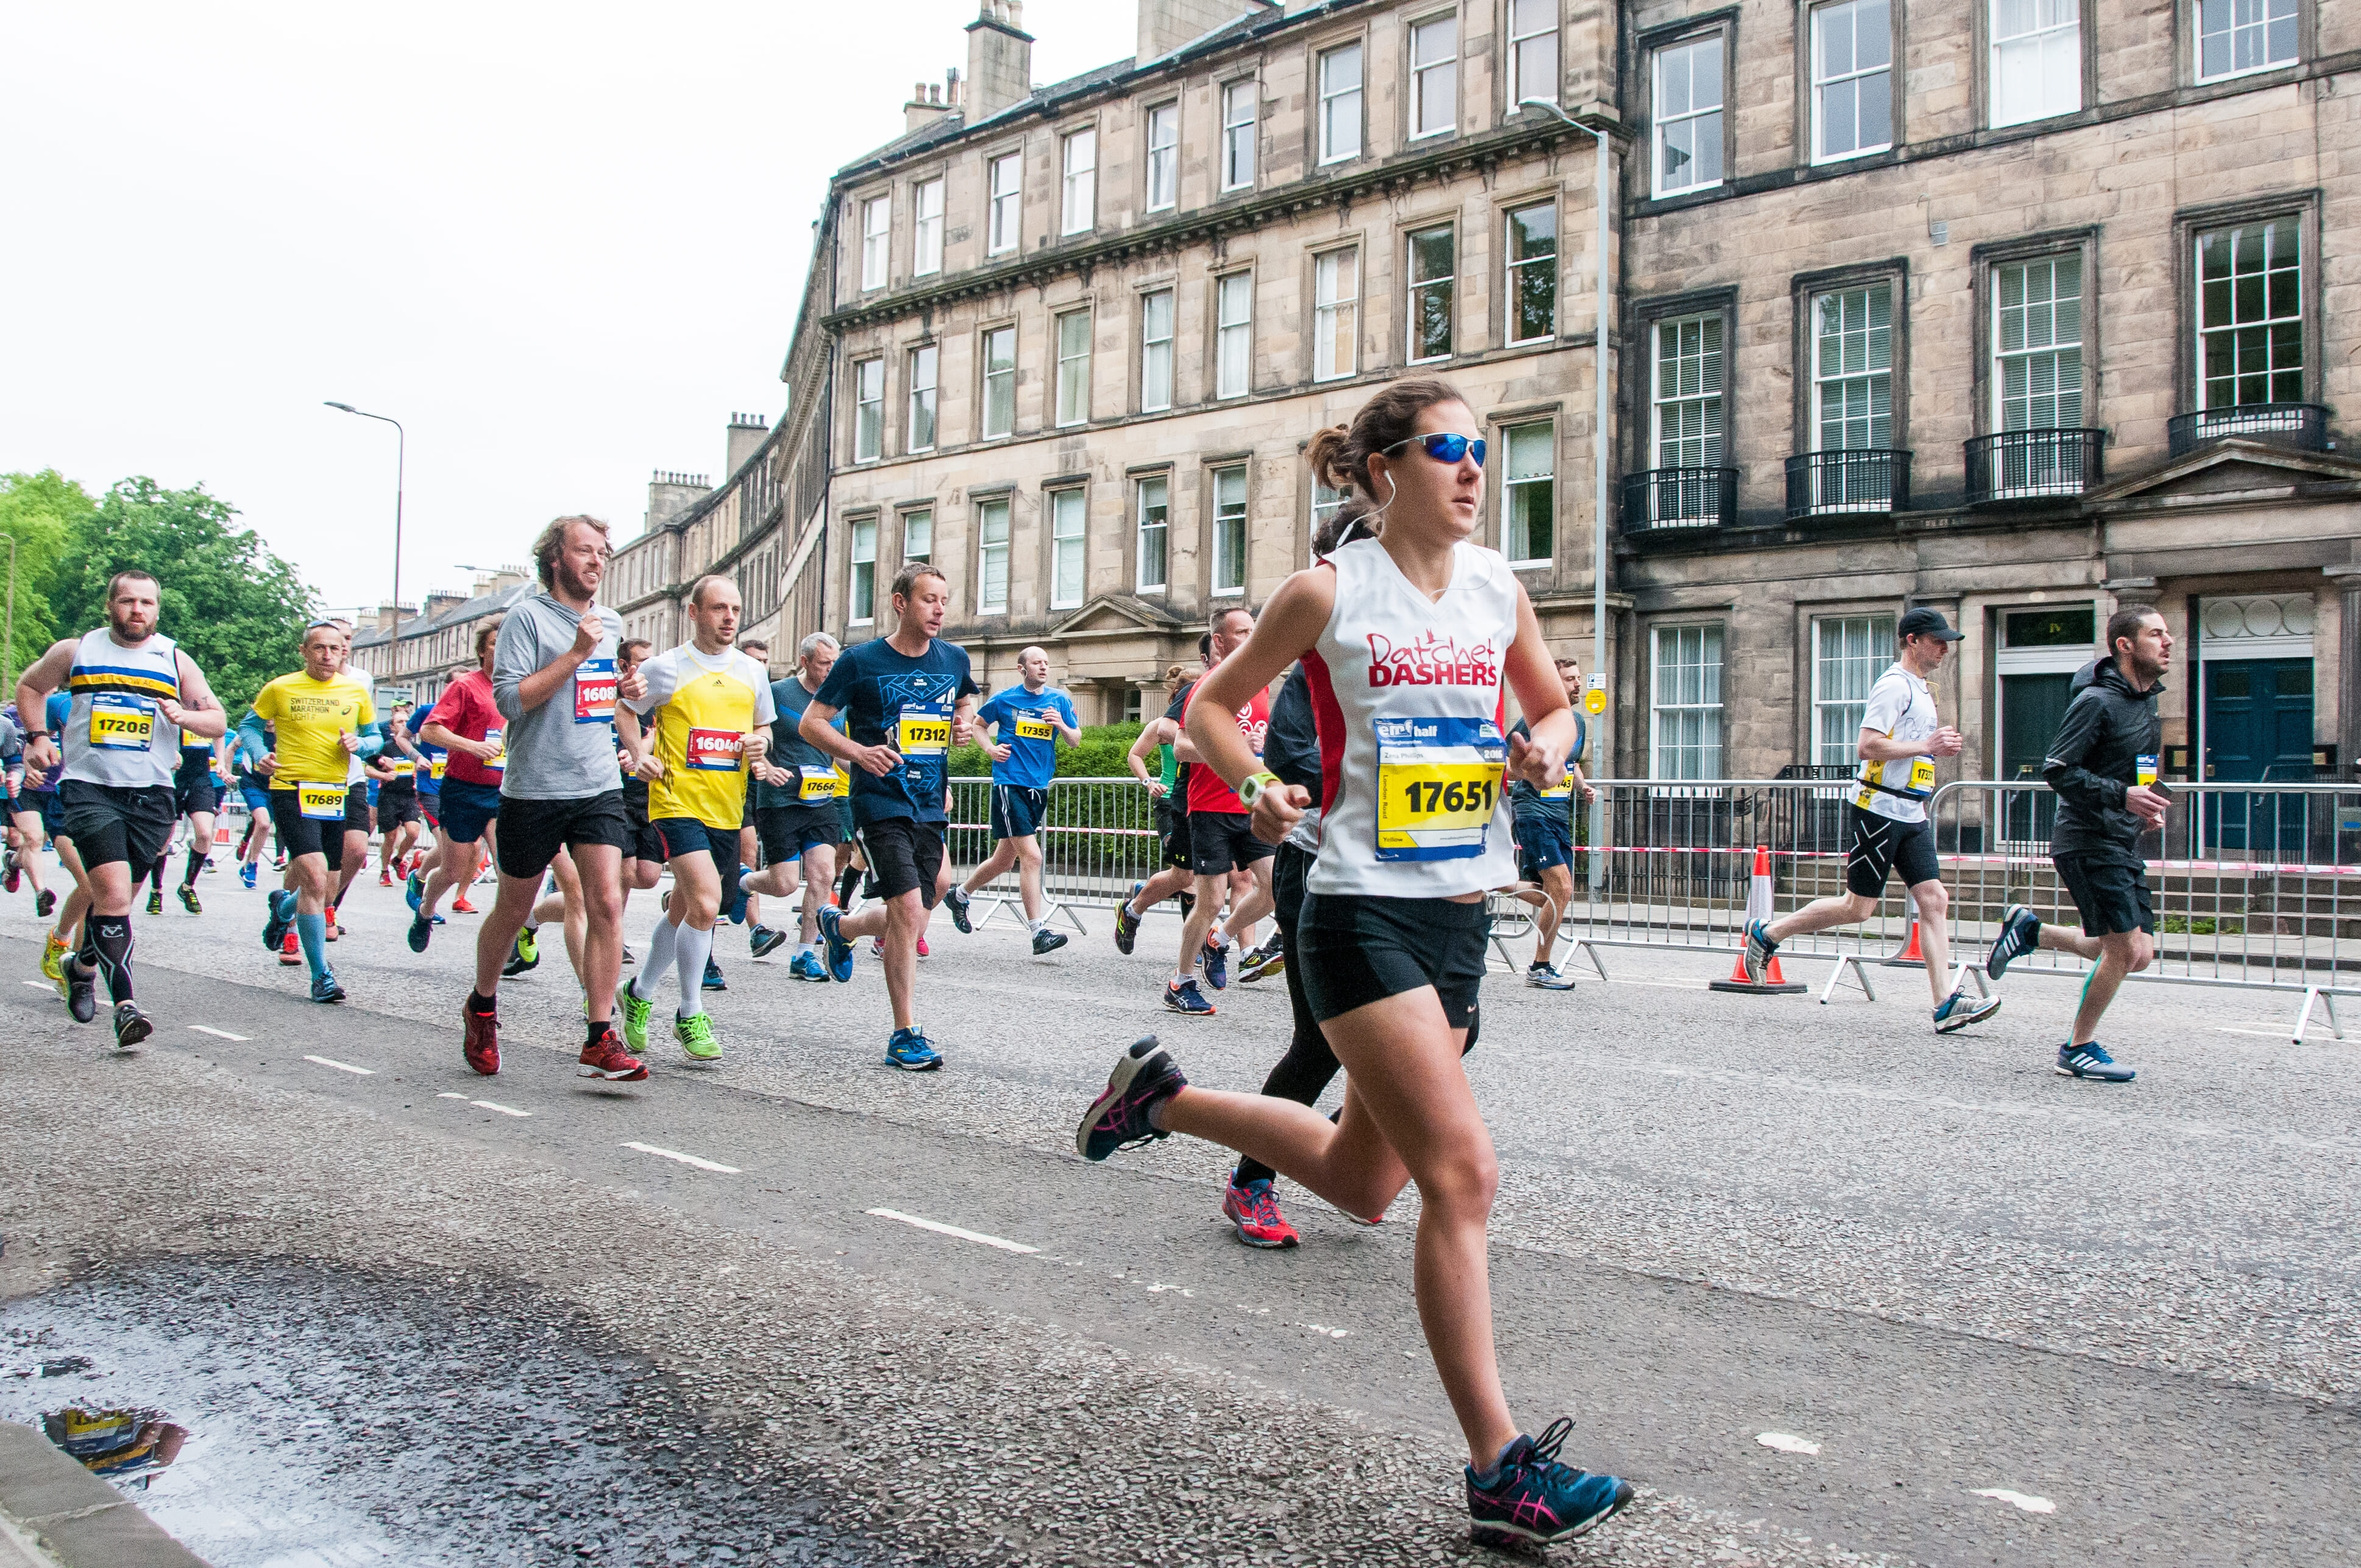 Edinburgh Marathon Festival